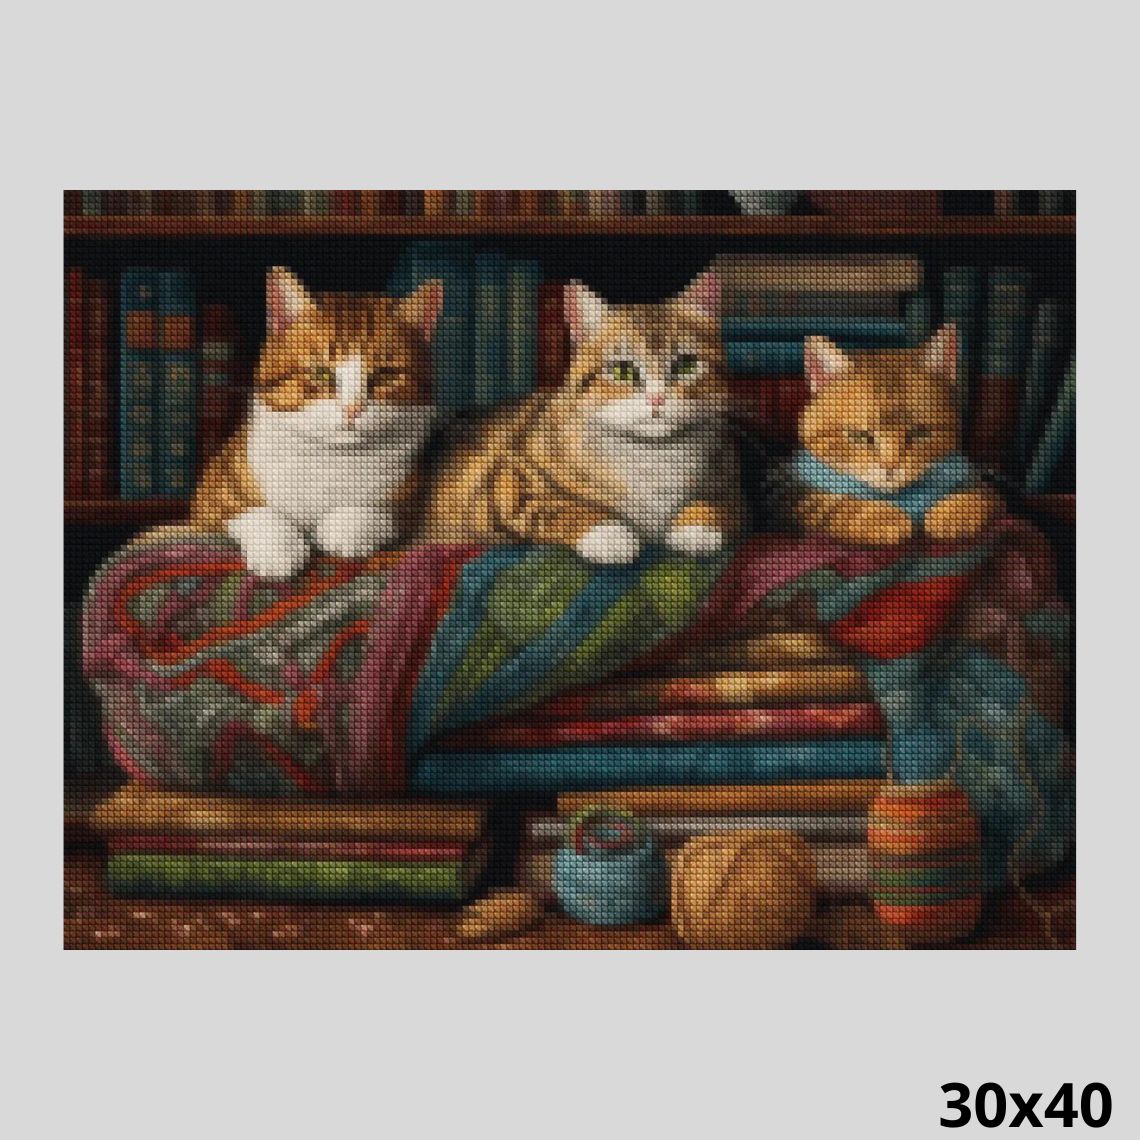 Cats on Sofa 30x40 Diamond art world